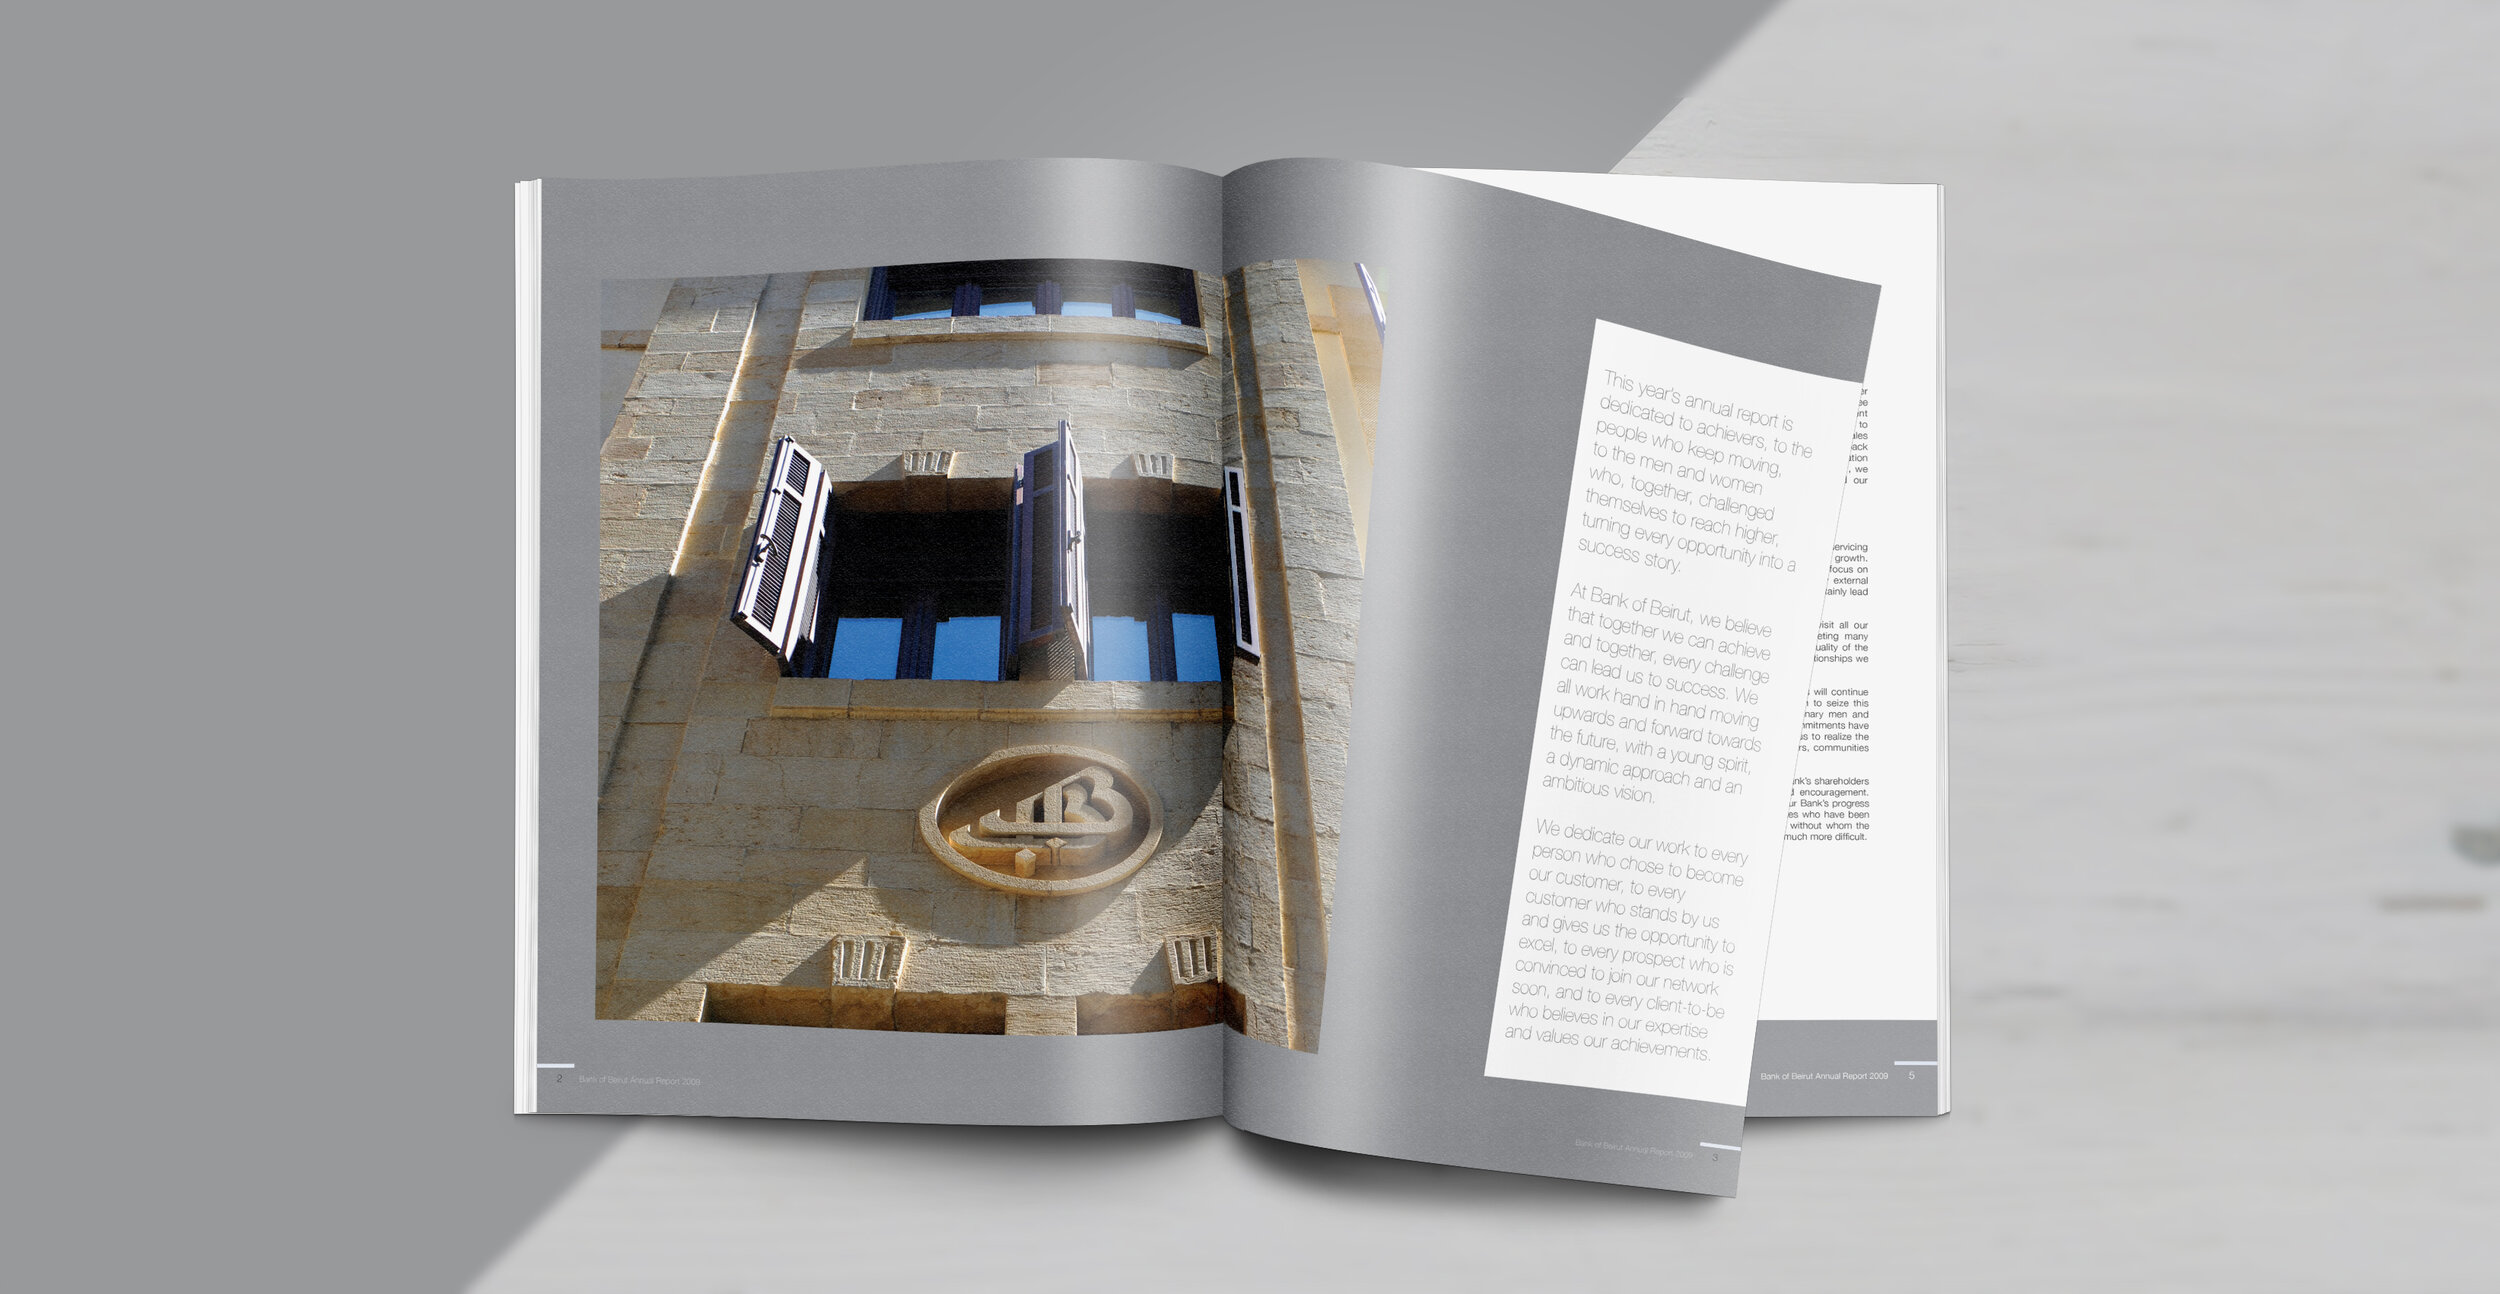 BOB_Bank_of_beirut_annual_report_2009_creative_layout_design_book_print_pages_circle_agency_uae_dubai_visual_communication_2.jpg